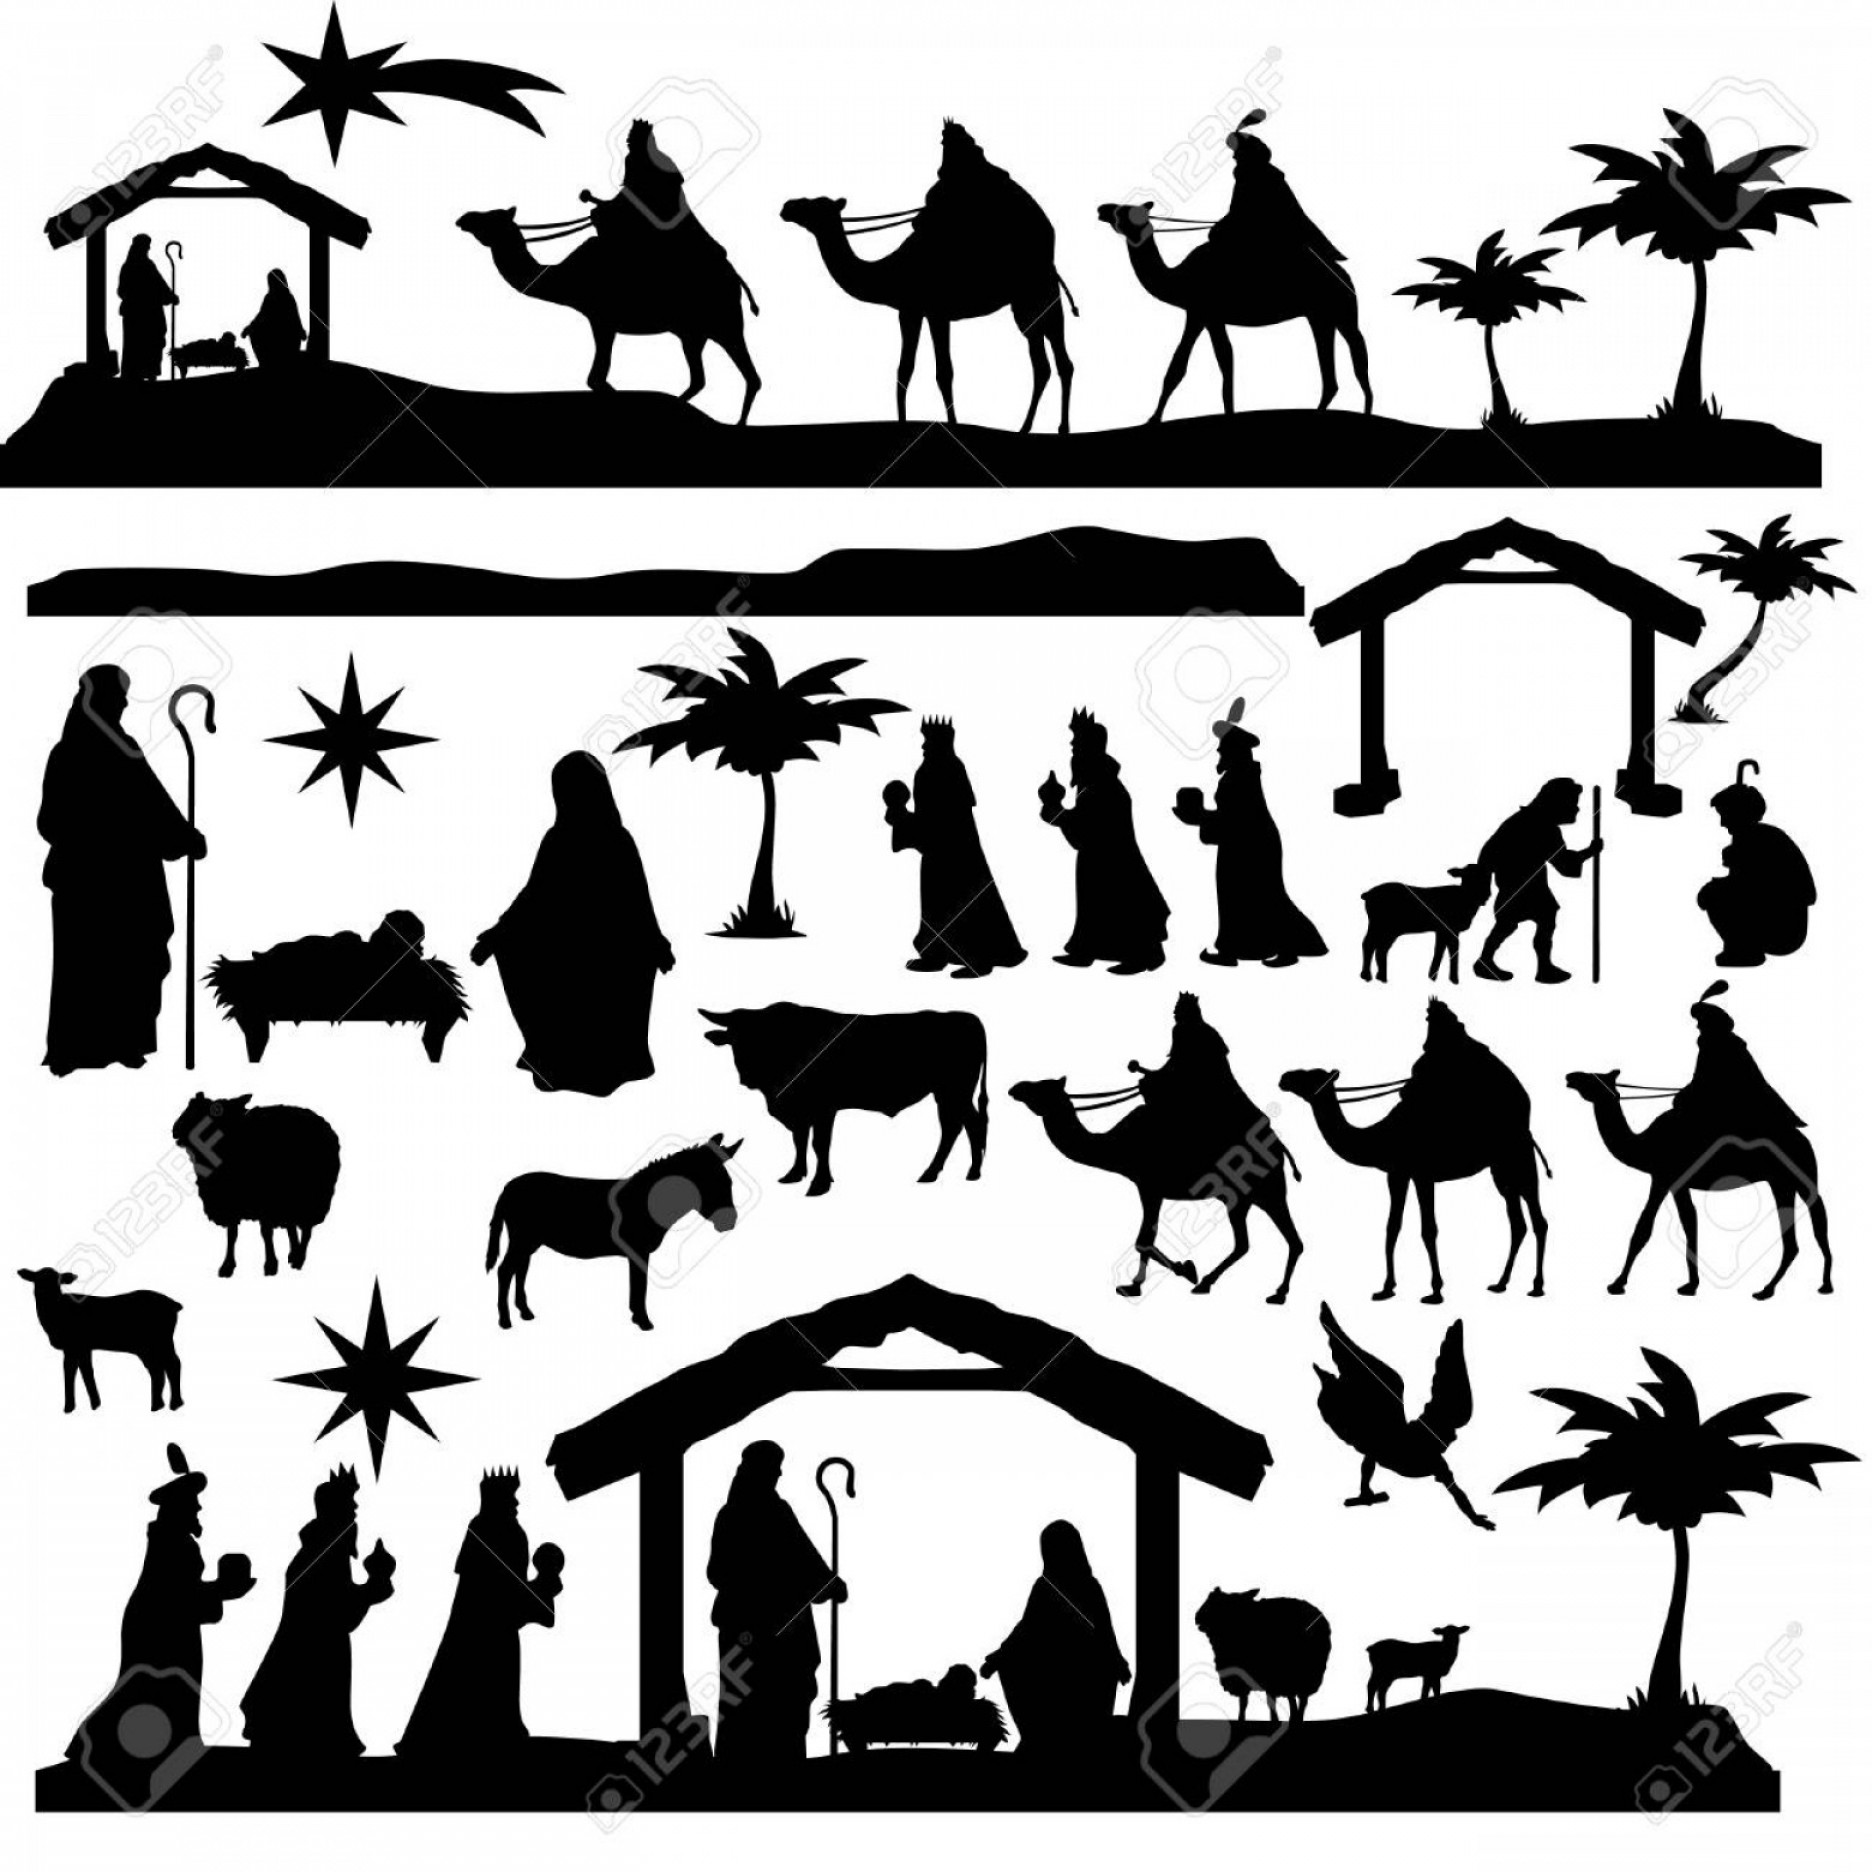 Printable Nativity Scene Silhouette, Web page 2 of 200.